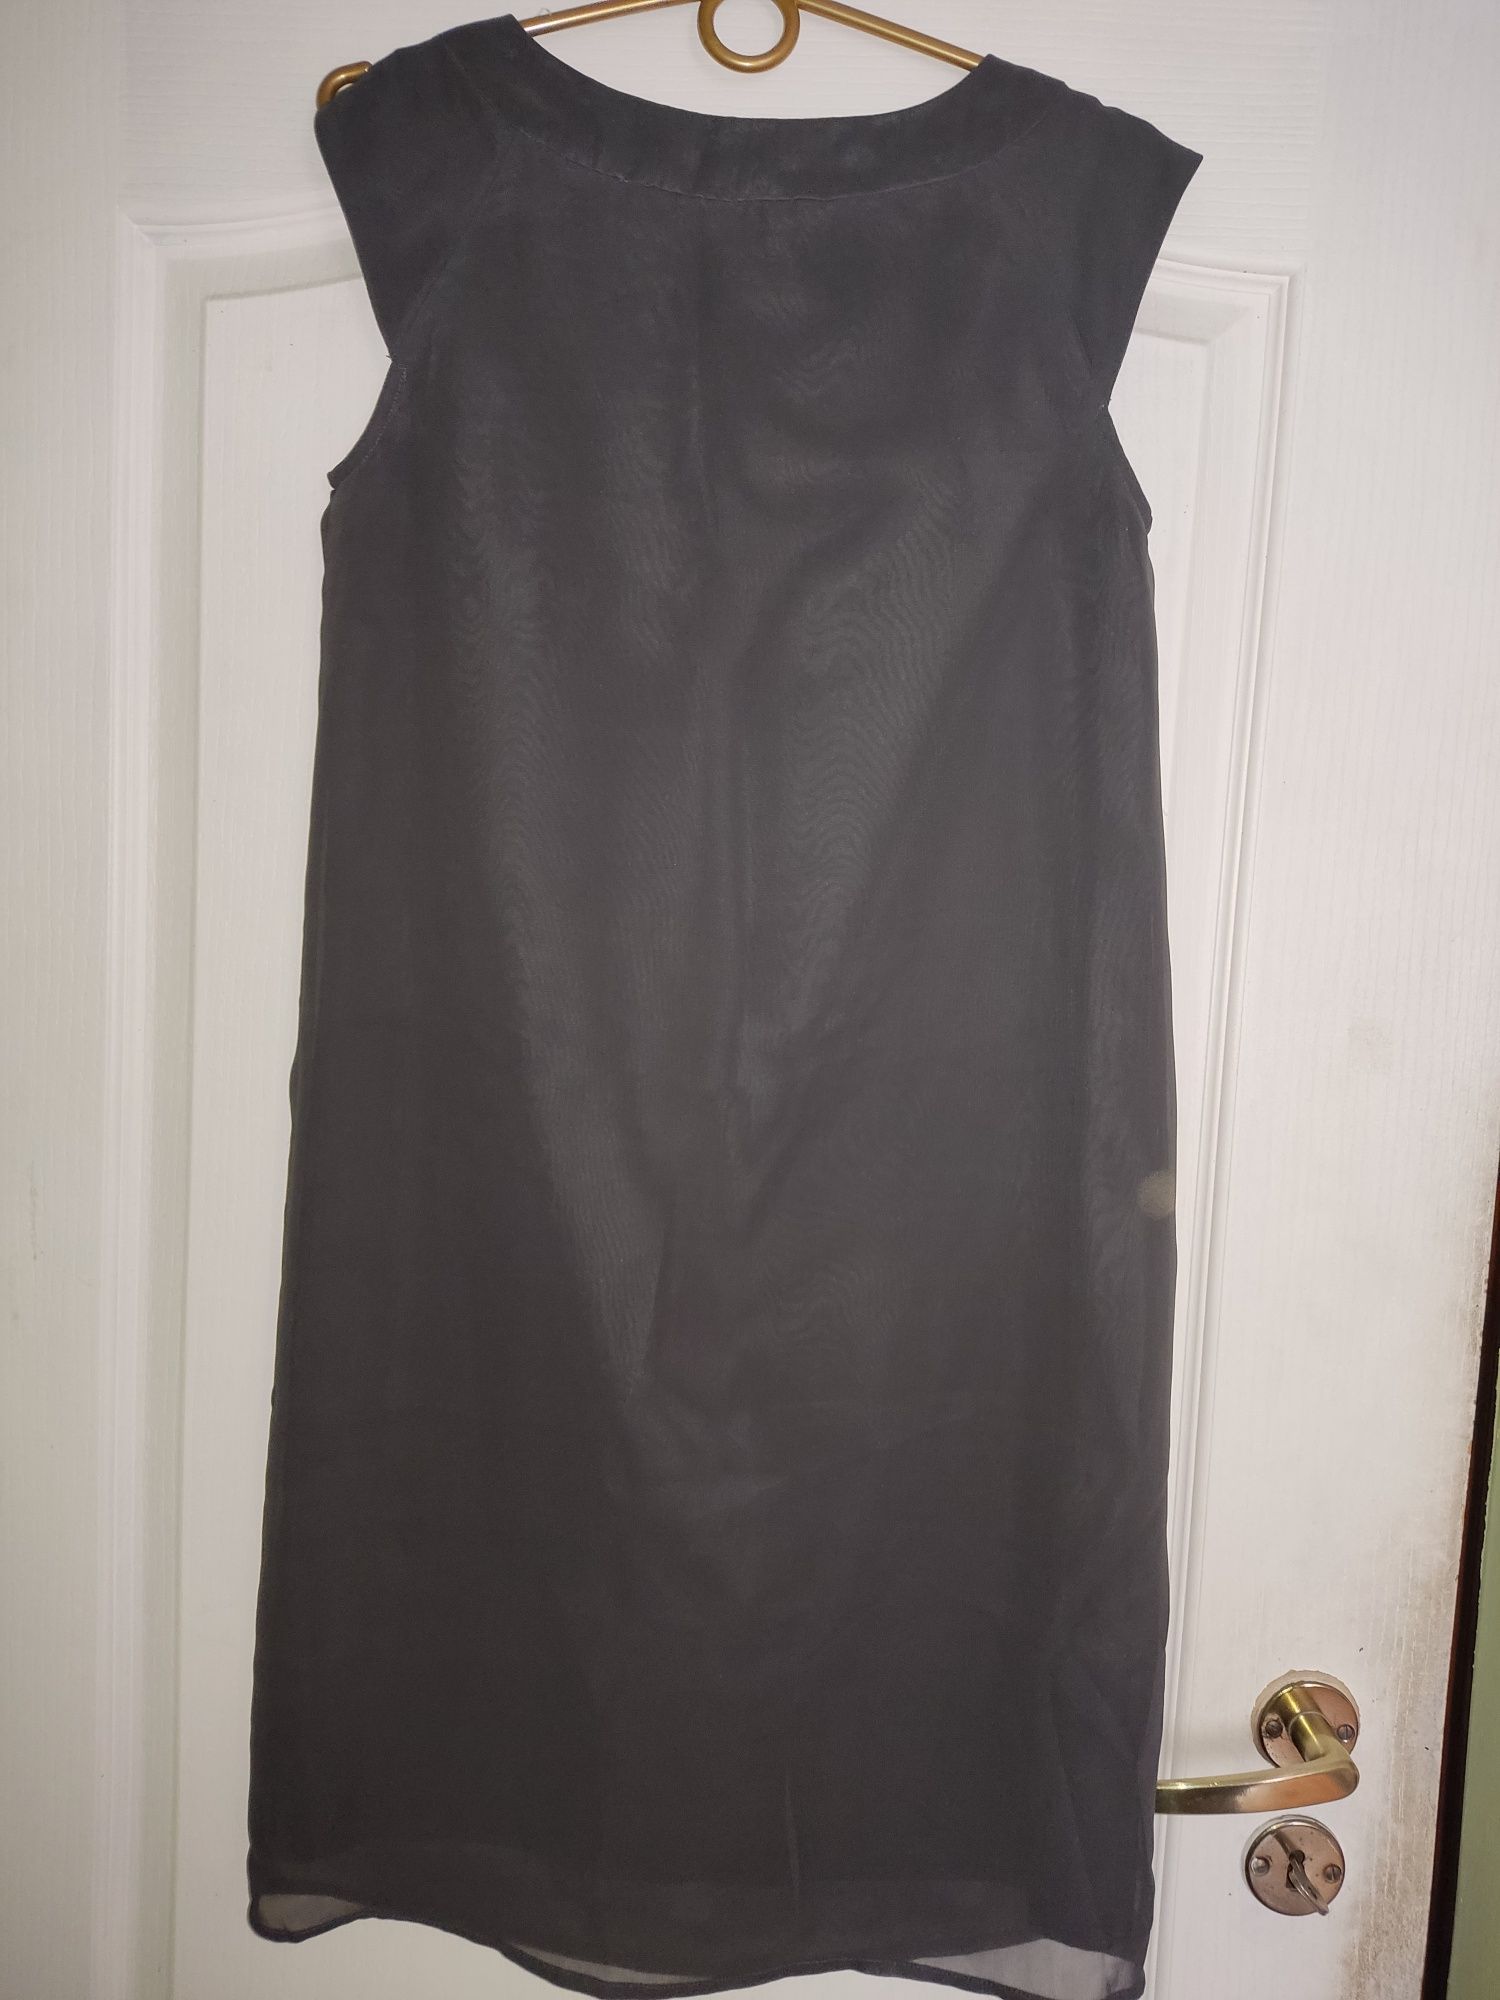 Śliczna sukienka Tatuum rozmiar s/ 36